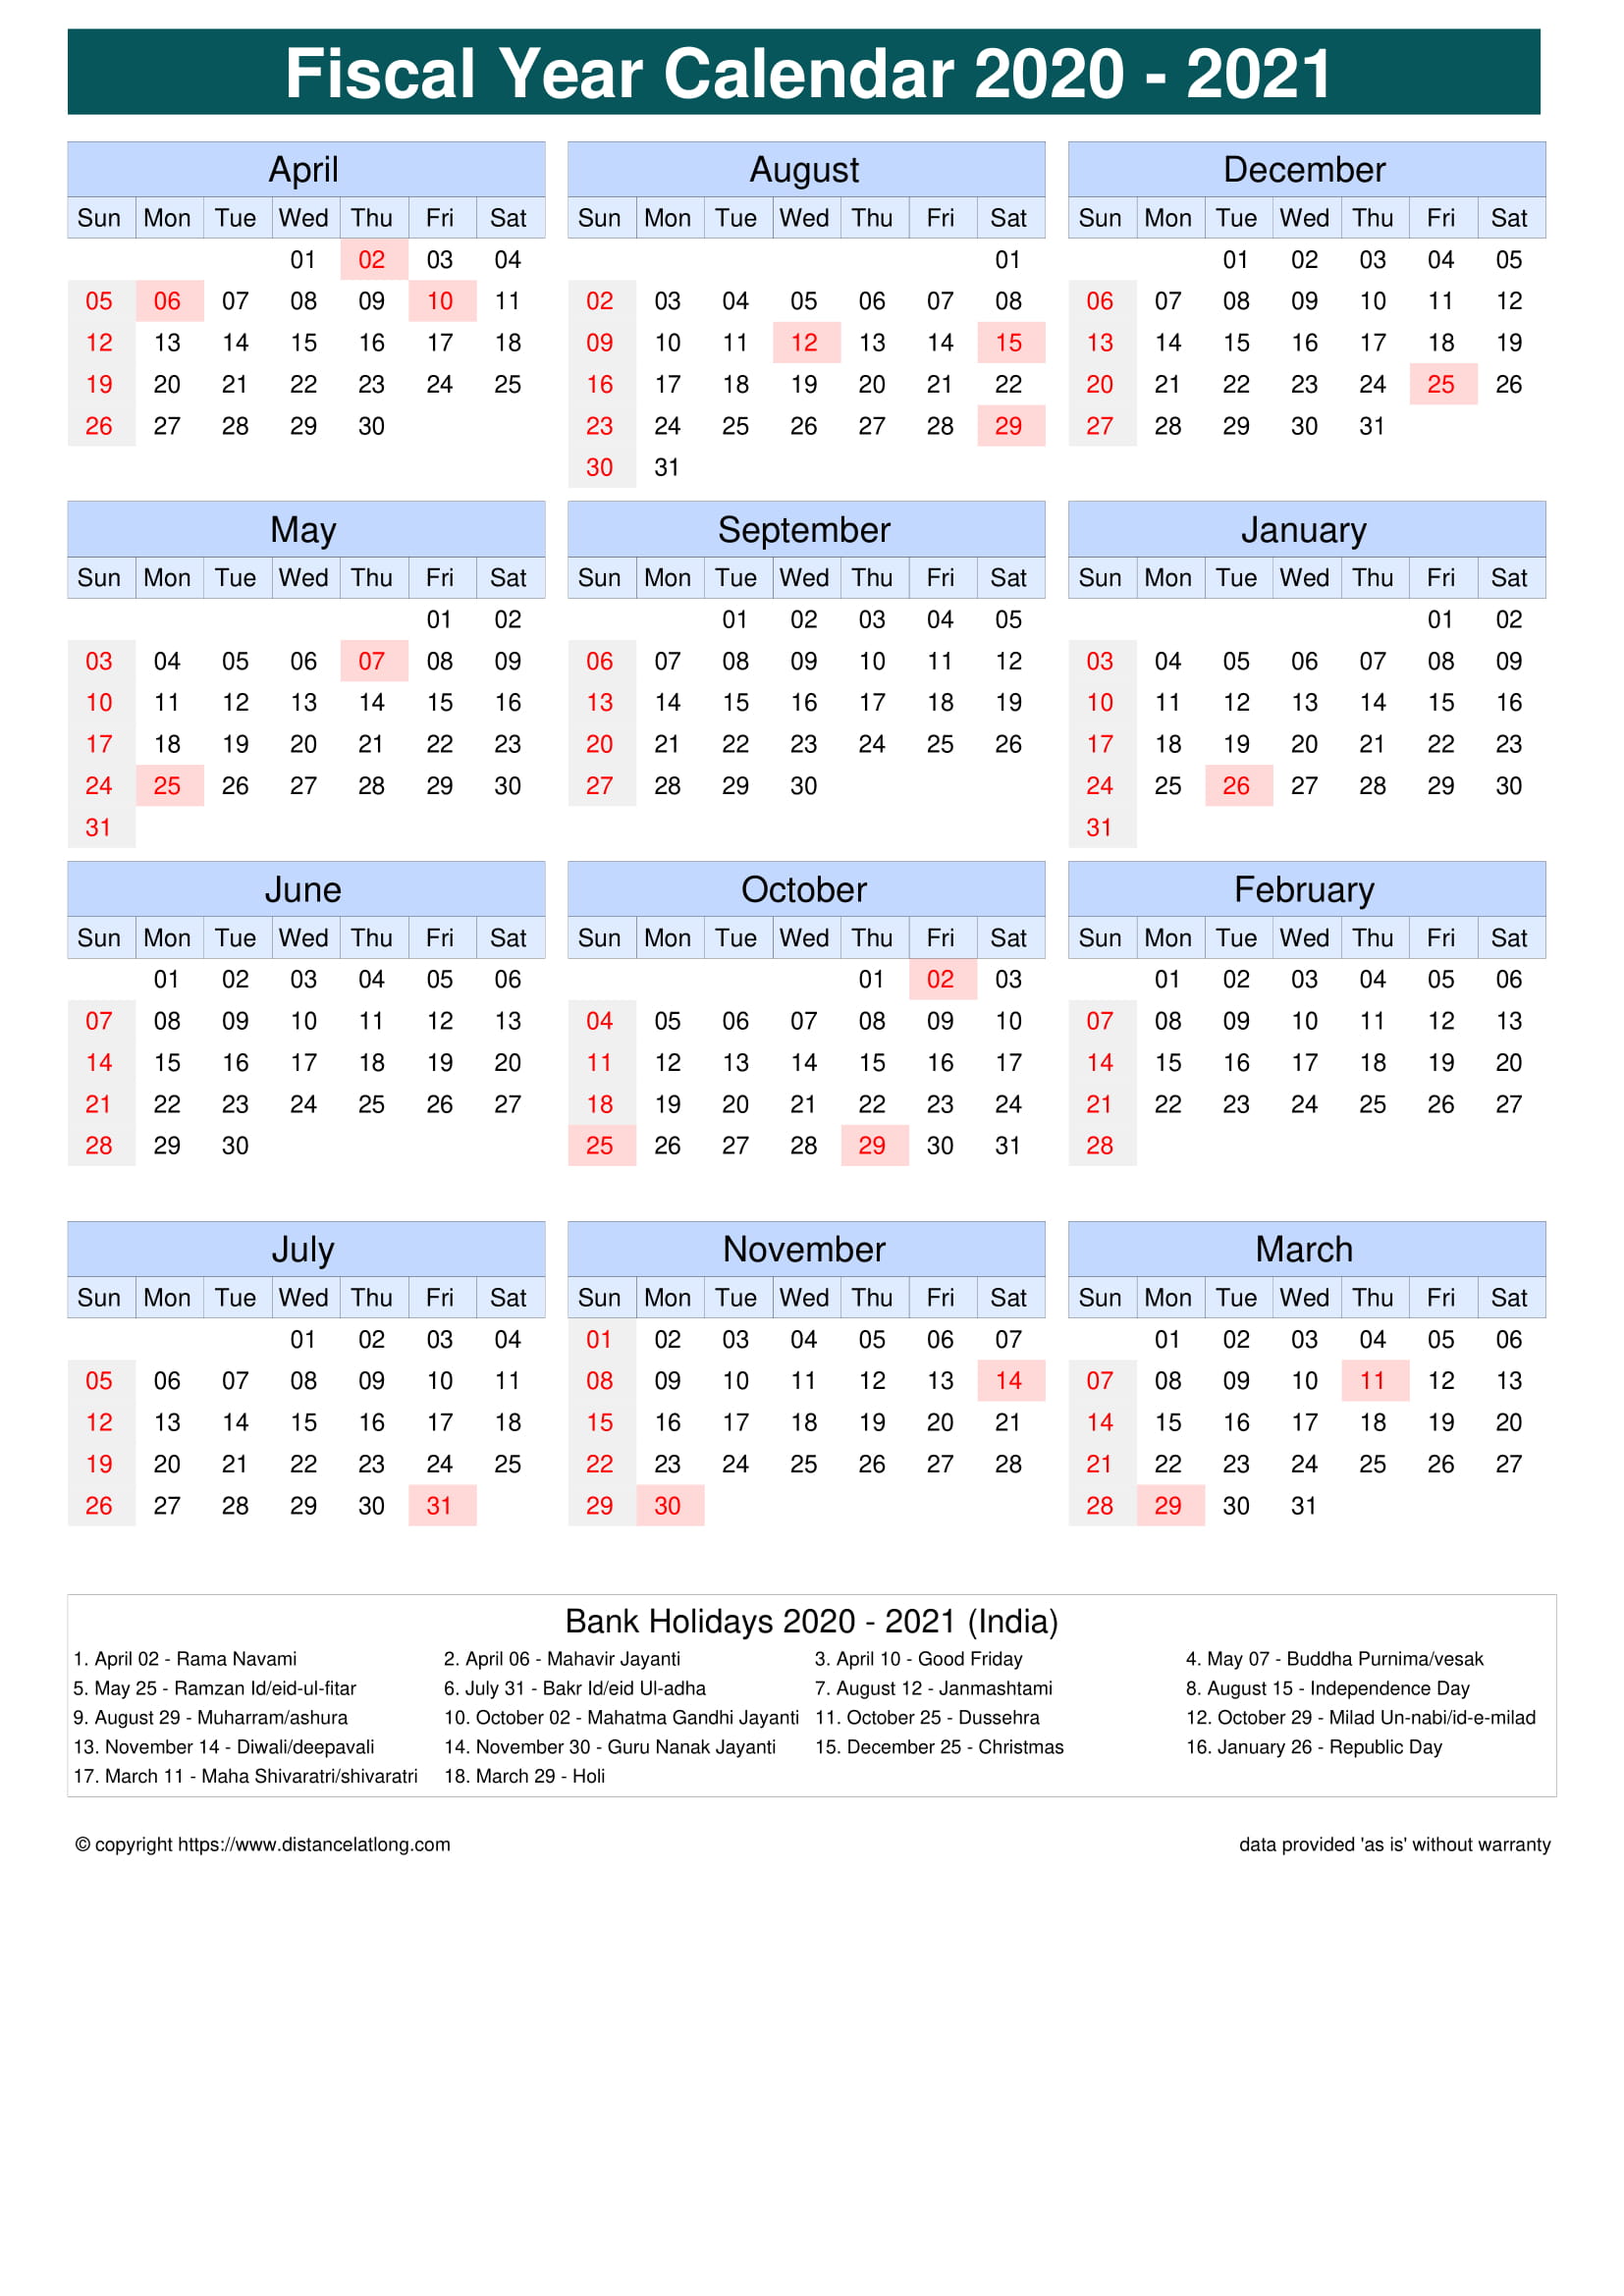 indian calendar 2021 pdf India Holiday Calendar 2021 Jpg Templates Distancelatlong Com indian calendar 2021 pdf